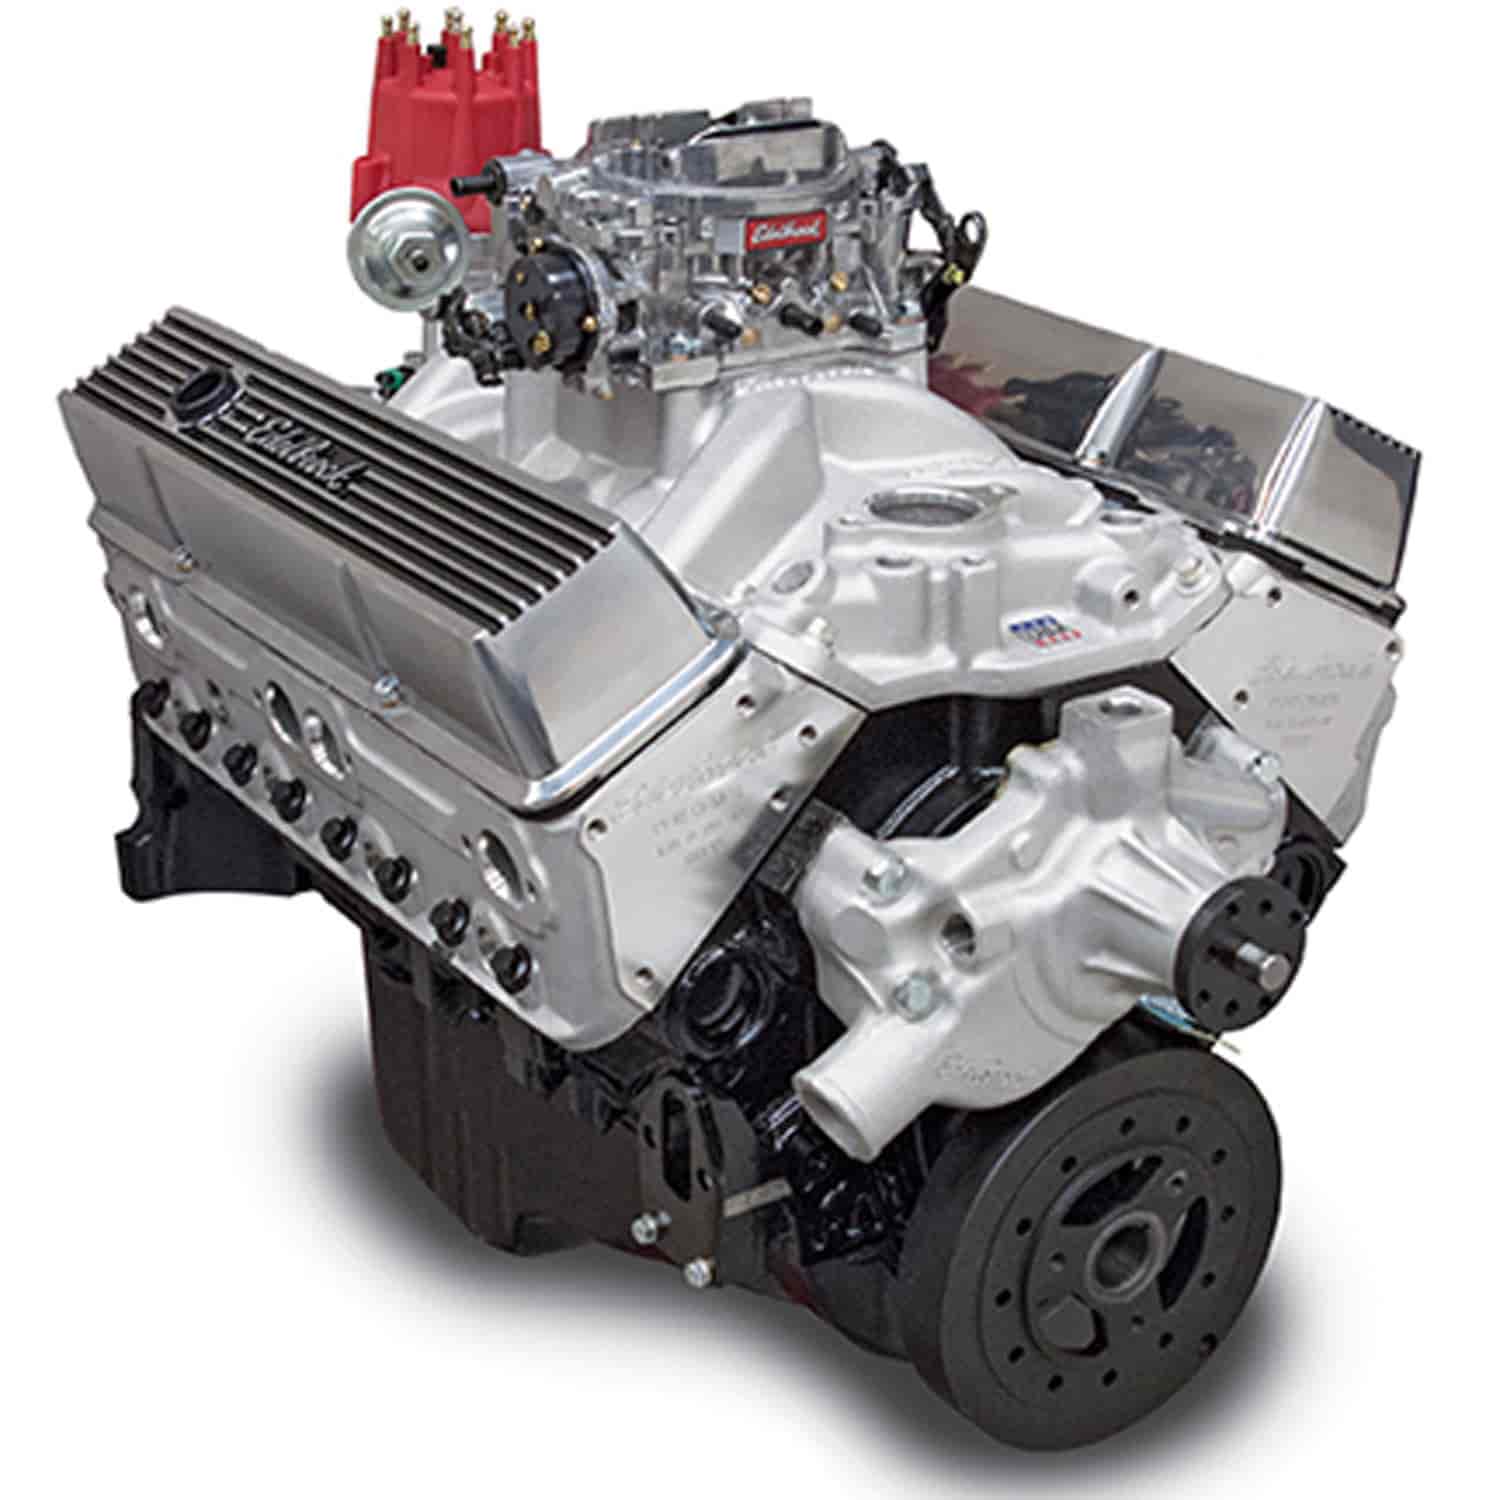 Performer SBC 350ci 310HP Crate Engine, Satin Finish,